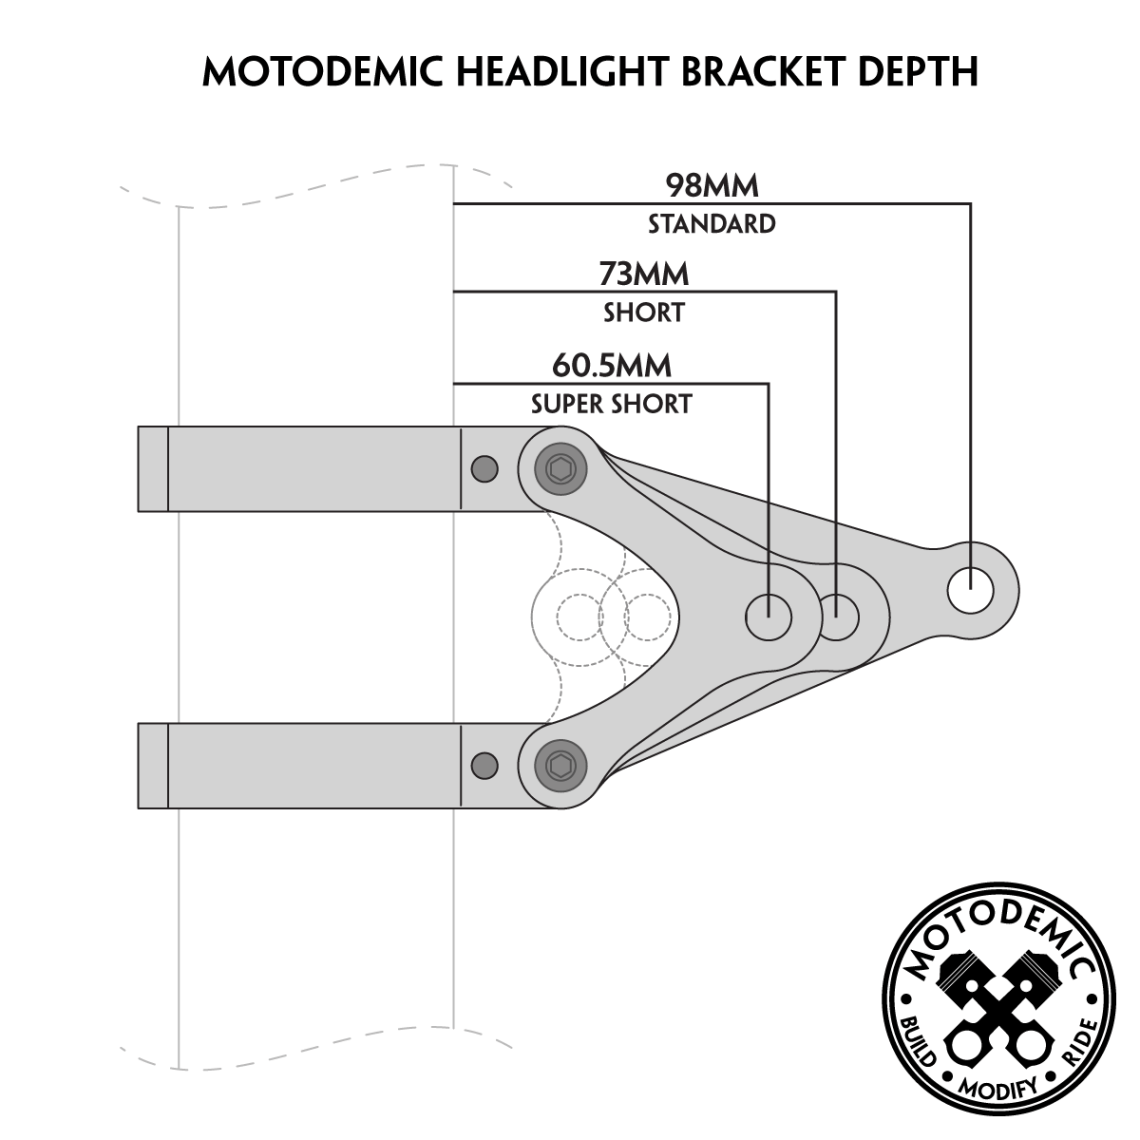 37mm Motodemic Headlight Brackets